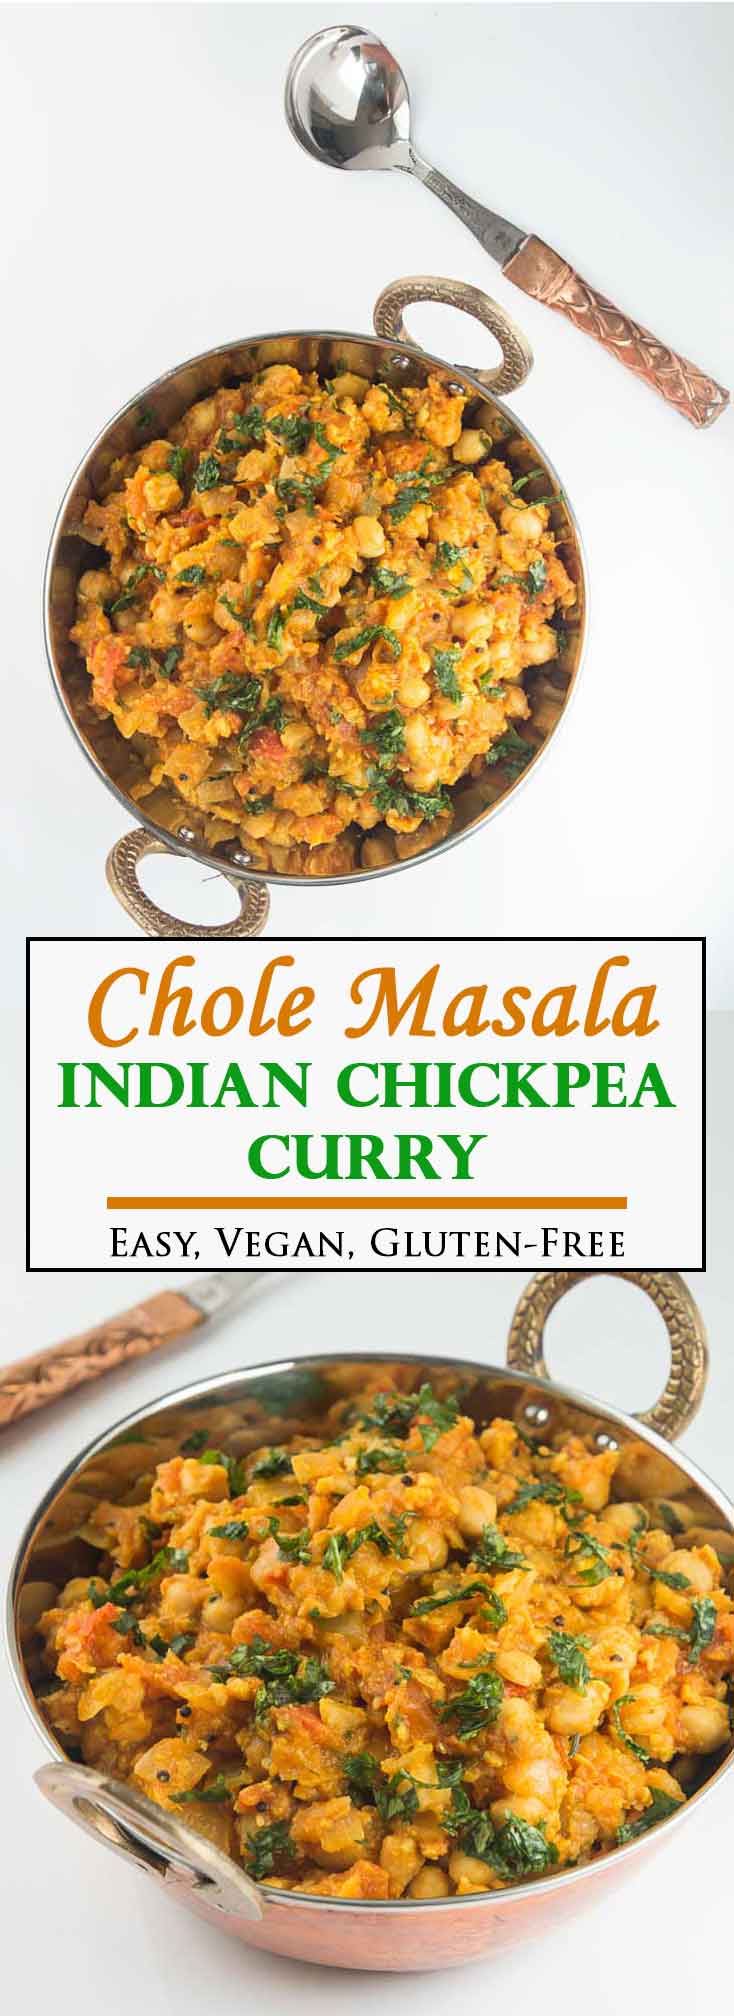 Chole Masala Recipe (Indian Chickpea Curry) #vegan #glutenfree | Vegetarian Gastronomy | www.VegetarianGastronomy.com